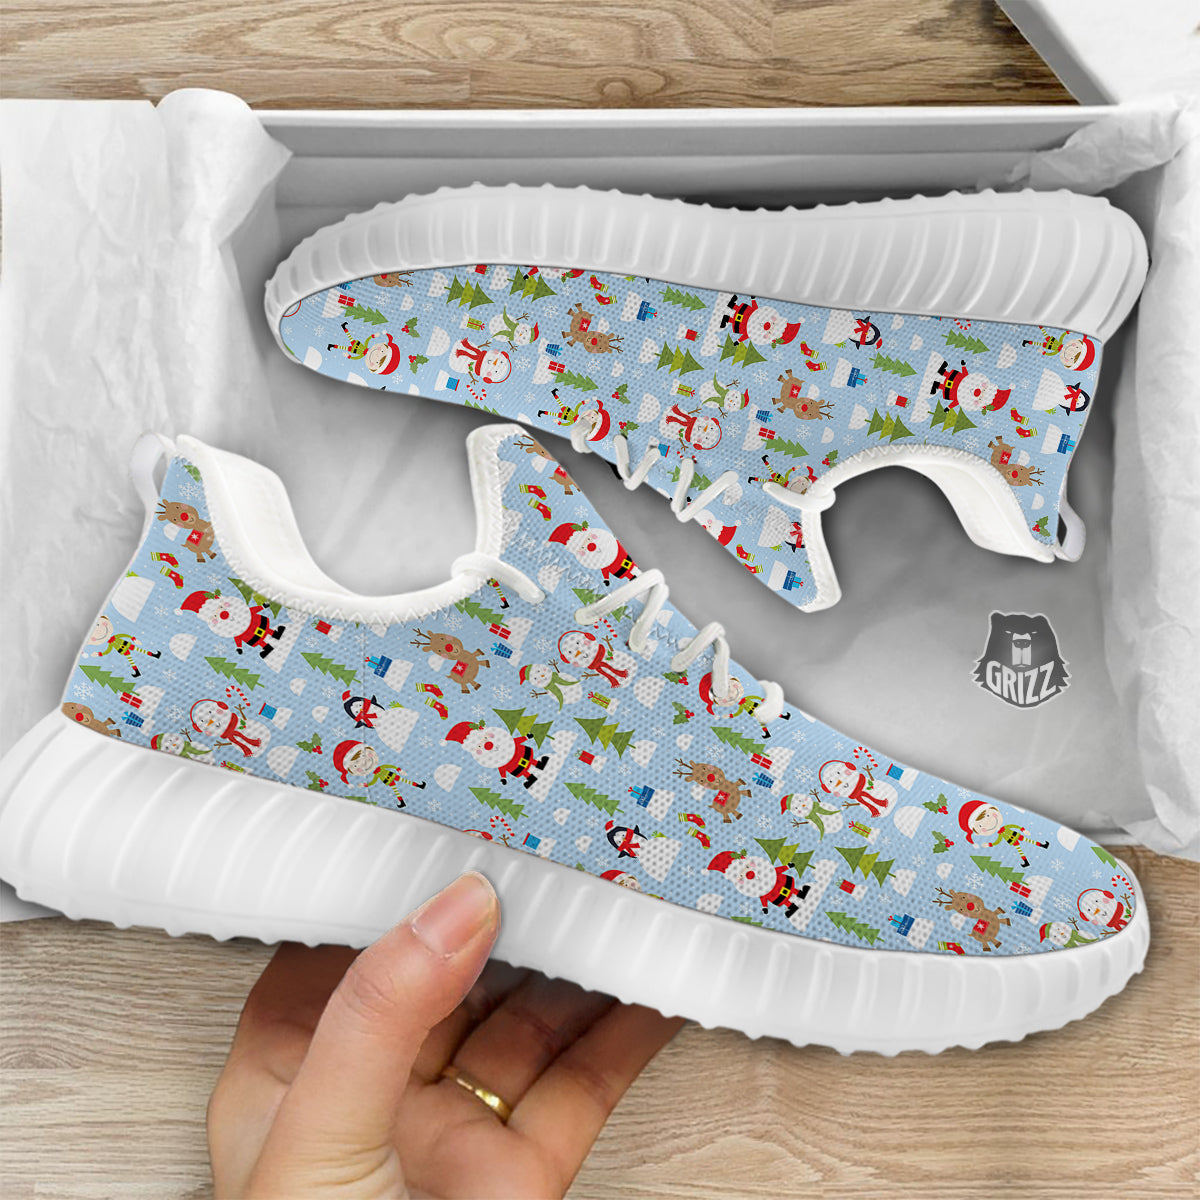 Merry Christmas Cute Print Pattern White Walking Shoes-grizzshop